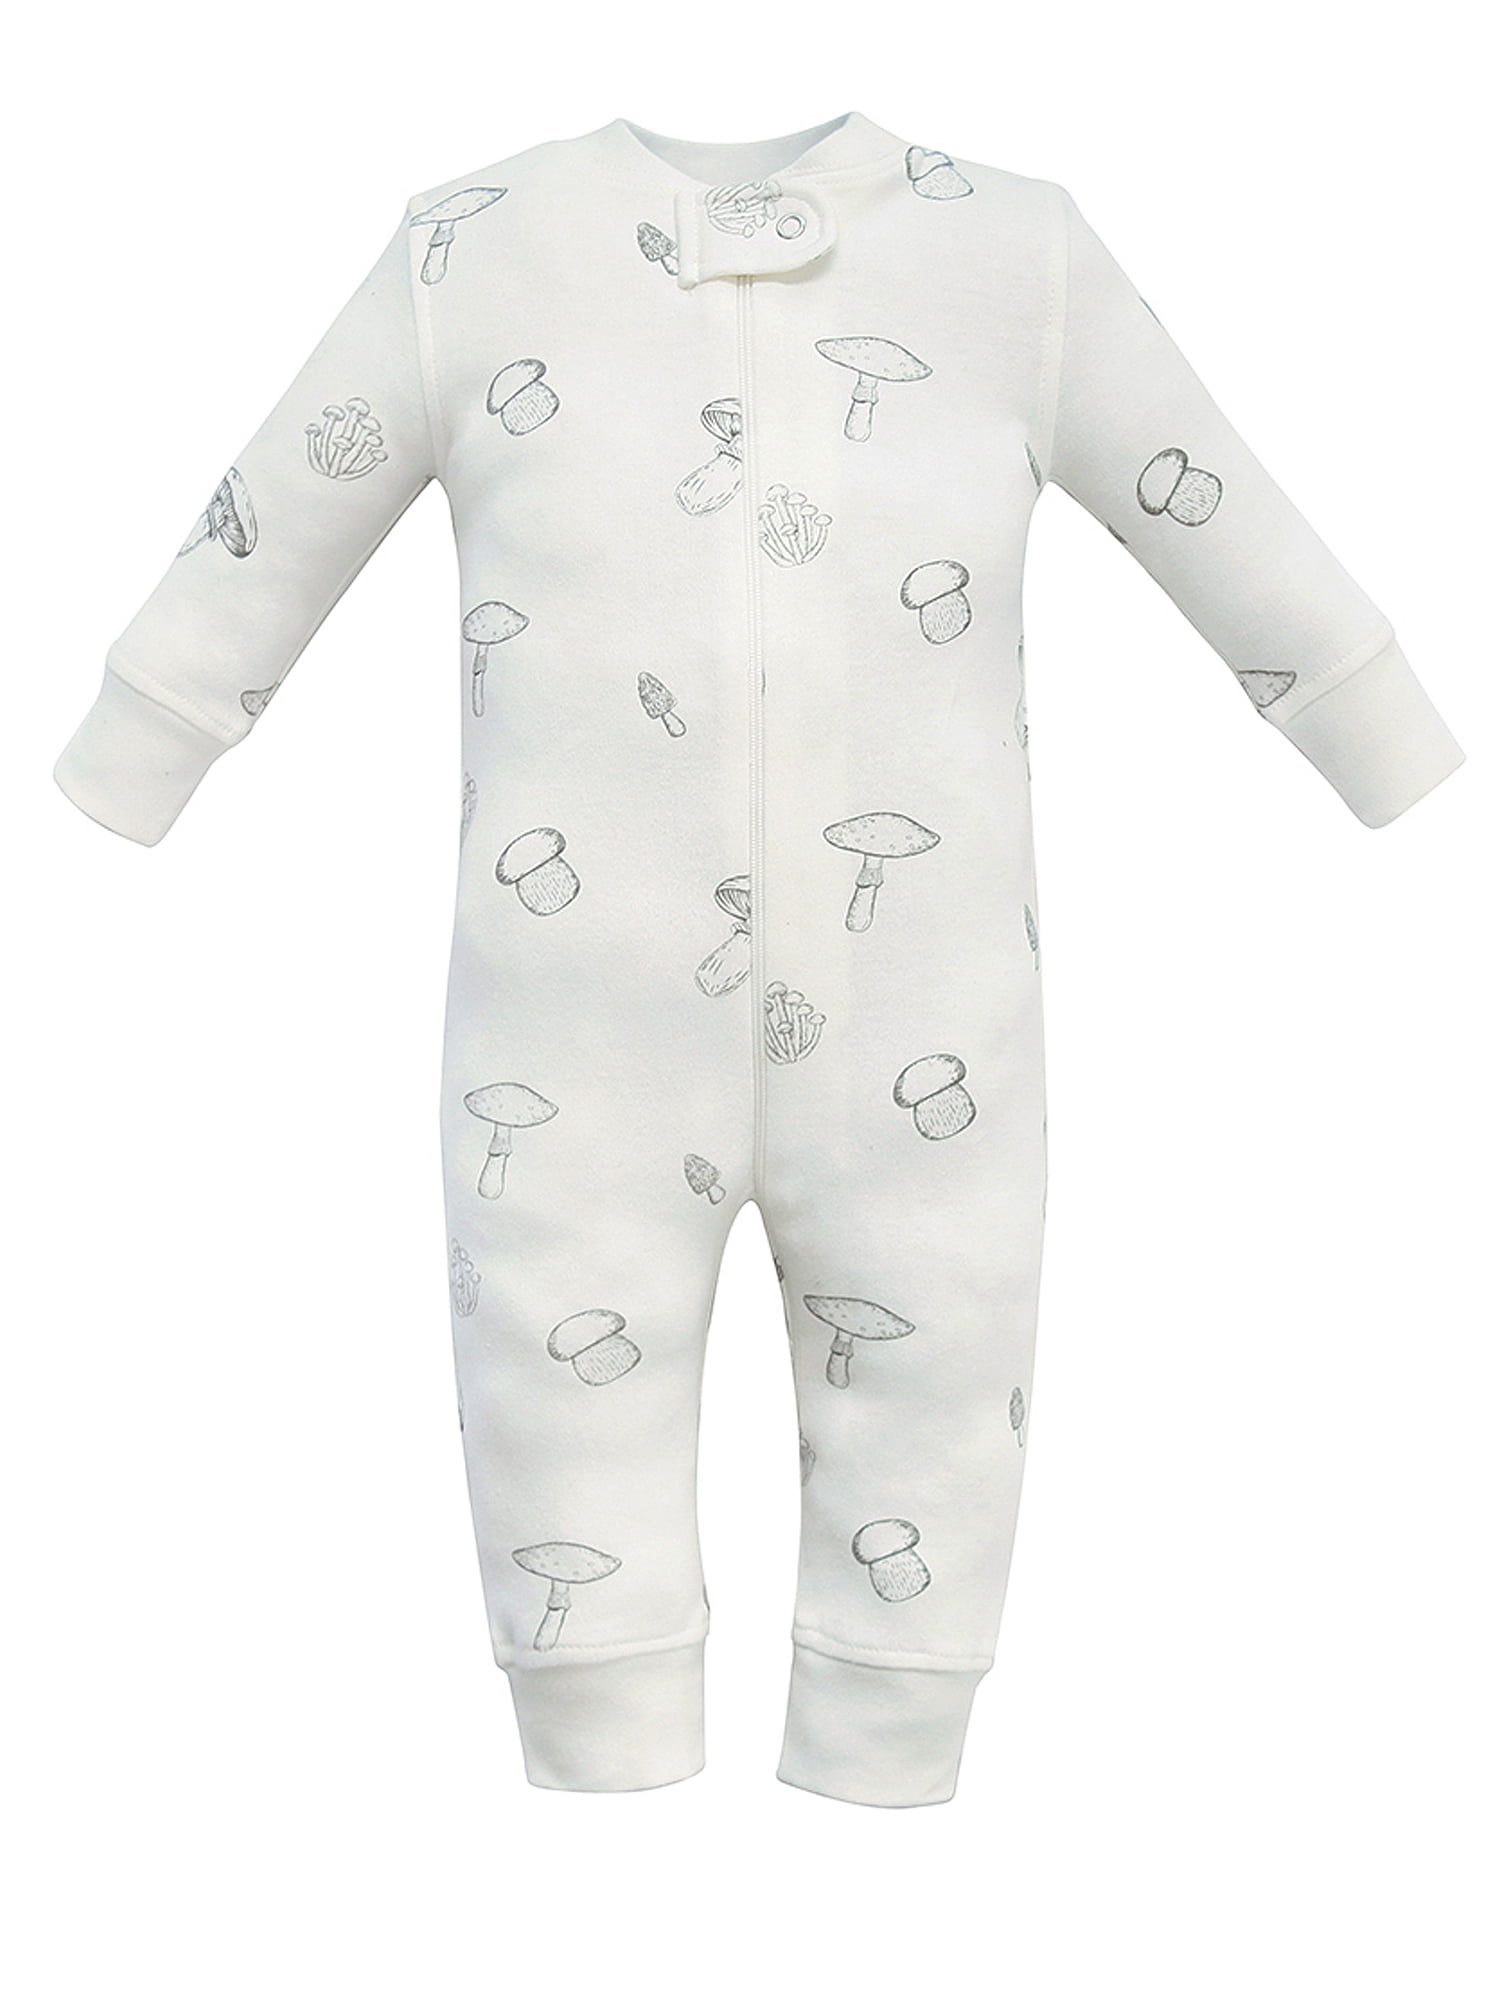 Owlivia Organic Cotton Baby Boy Girl Zip Front Sleep 'N Play Footed Baby Sleepwear Long Sleeve Pyjamas from Newborn to 18months